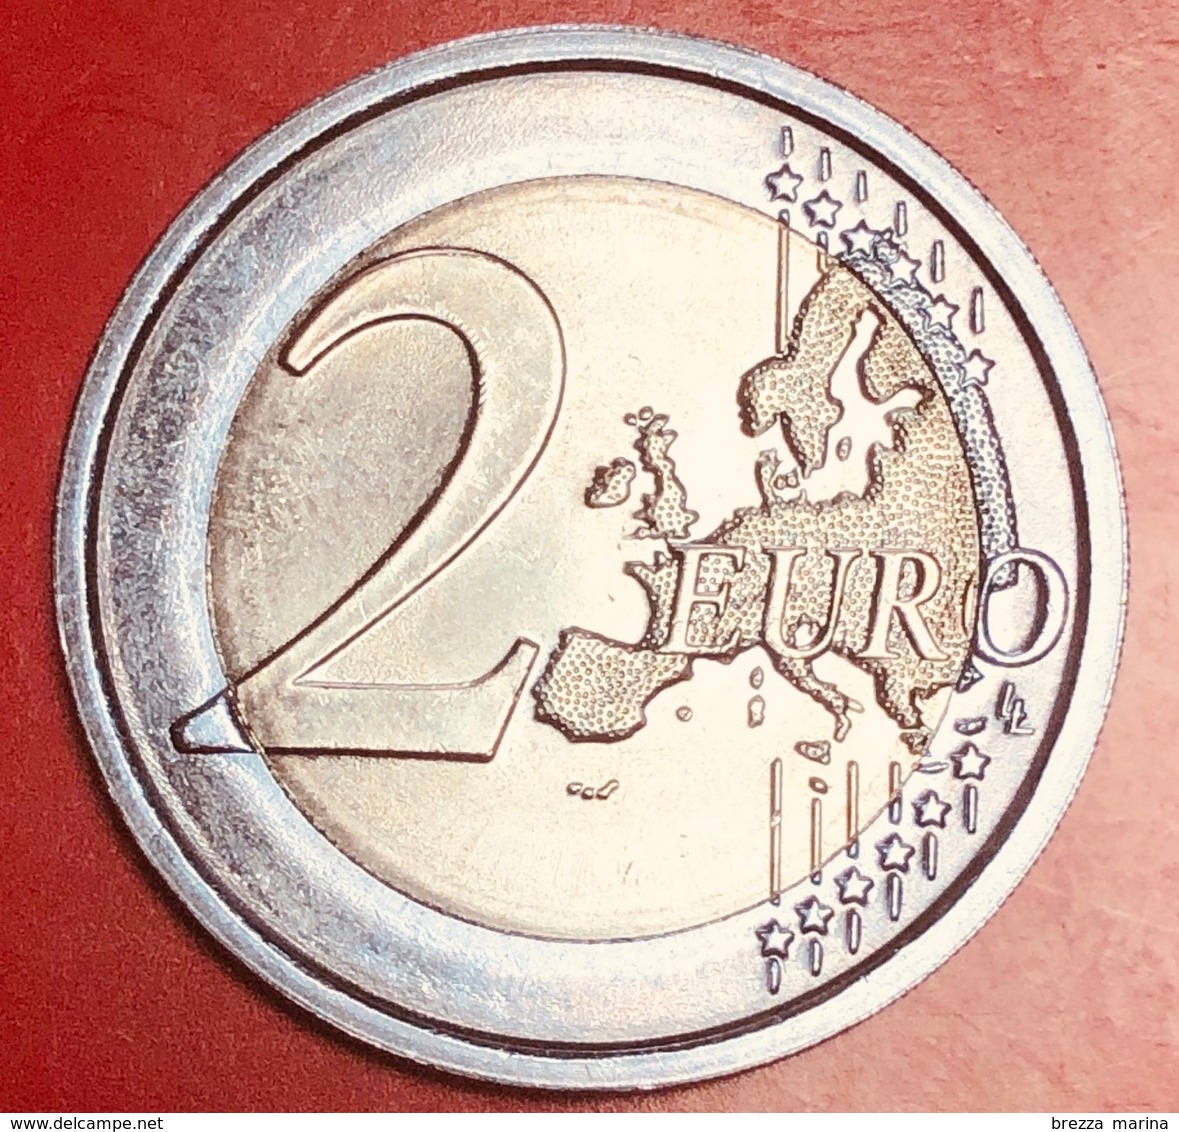 SPAGNA - 2001 - Moneta - Re Juan Carlos - Ritratto - Euro - 2.00 - Slovenia